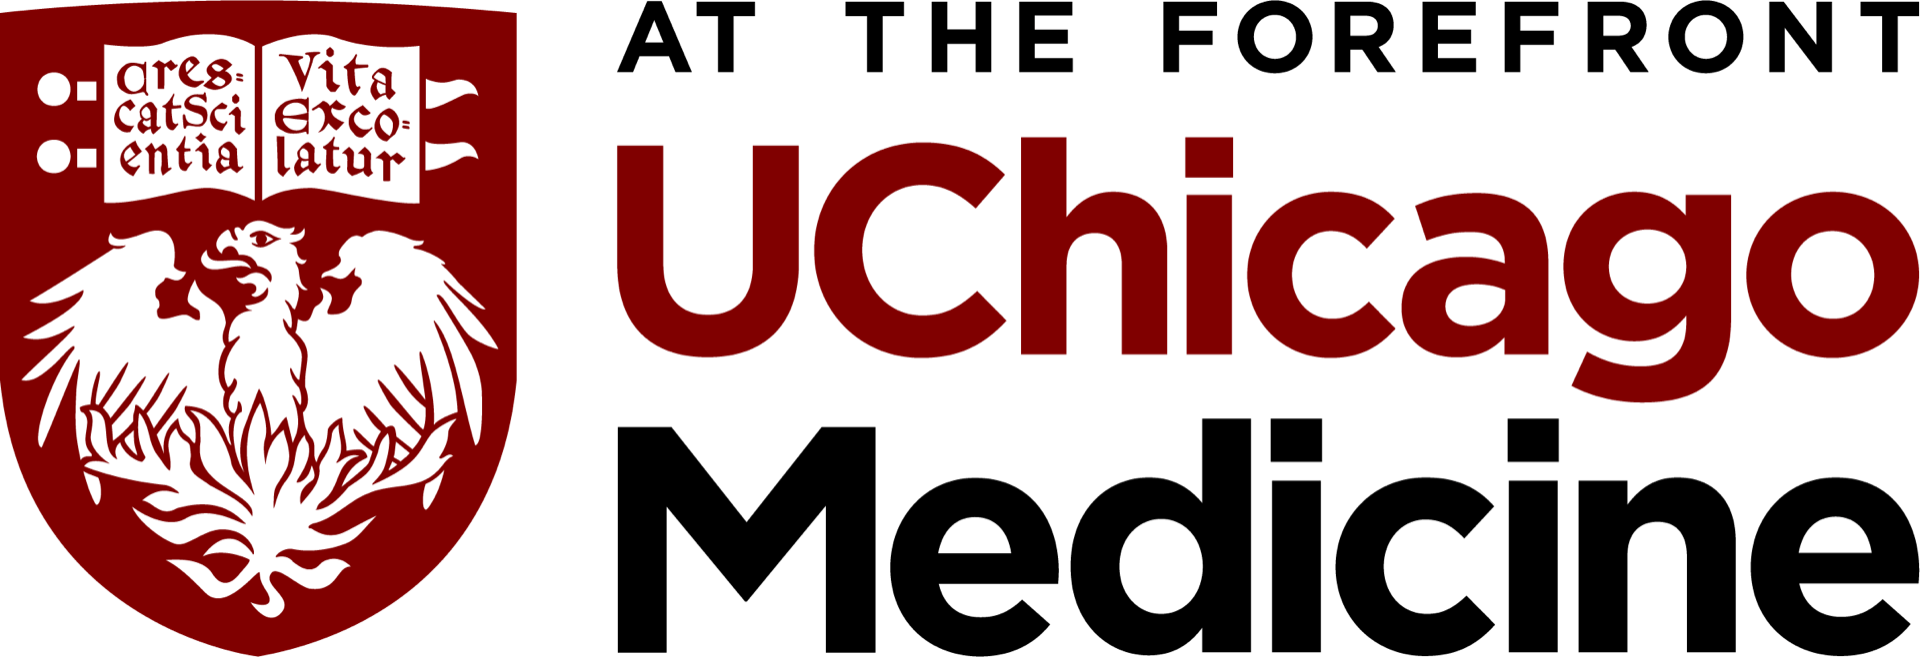 UChicago Medicine Logo